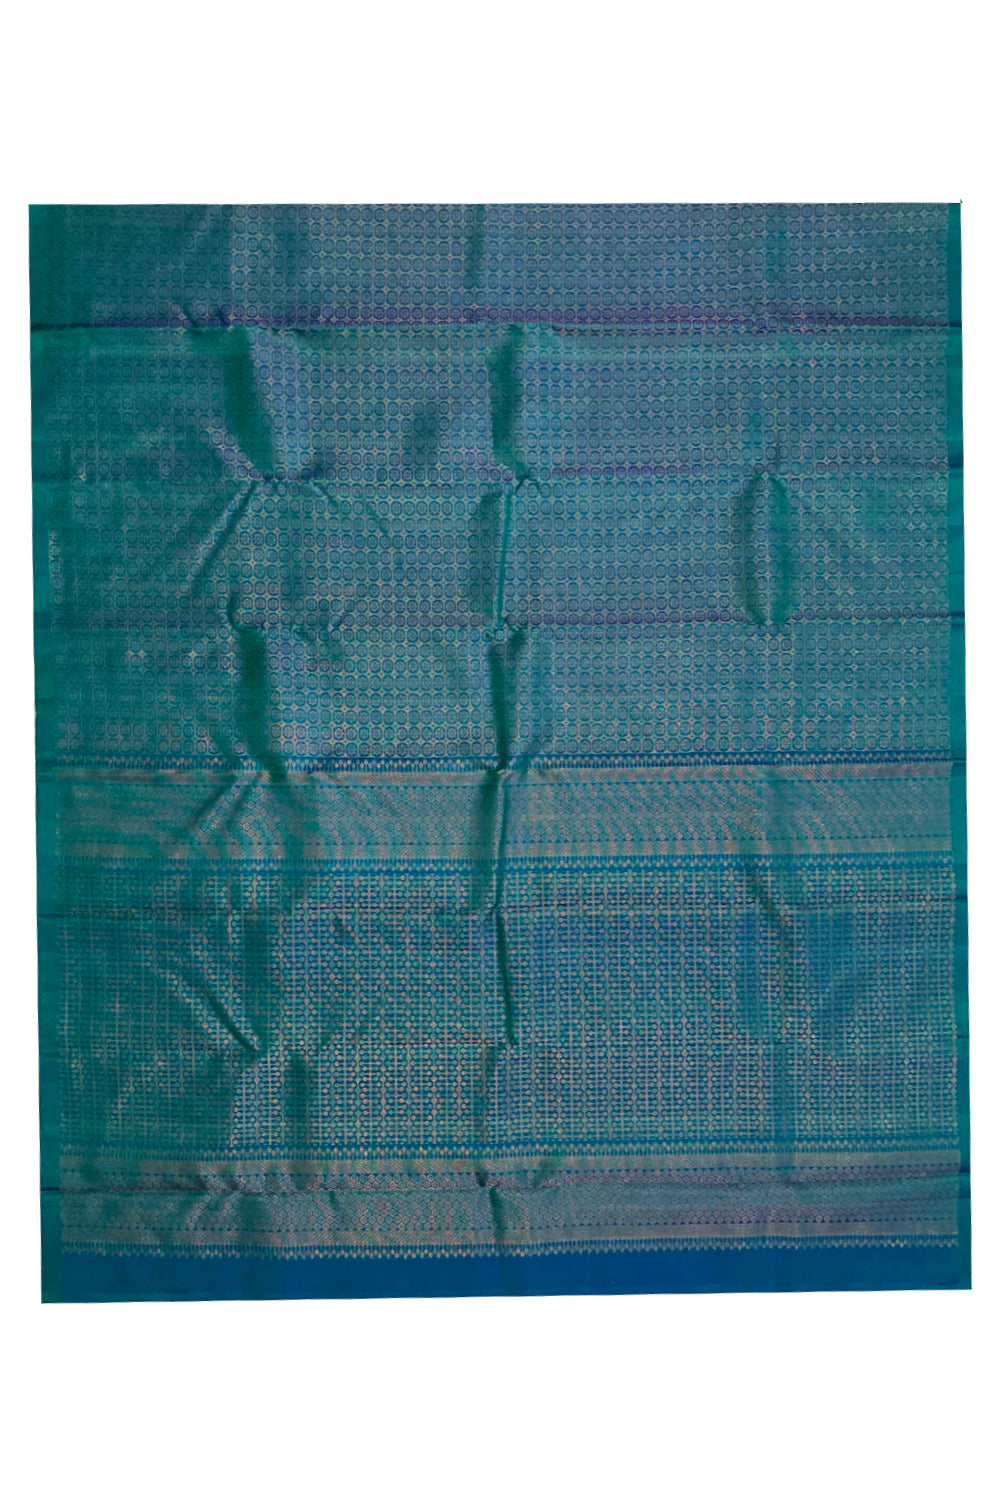 Southloom Handloom Pure Silk Manthrakodi Kanchipuram Saree in Single Teal Blue Colour and Silver Zari Motifs